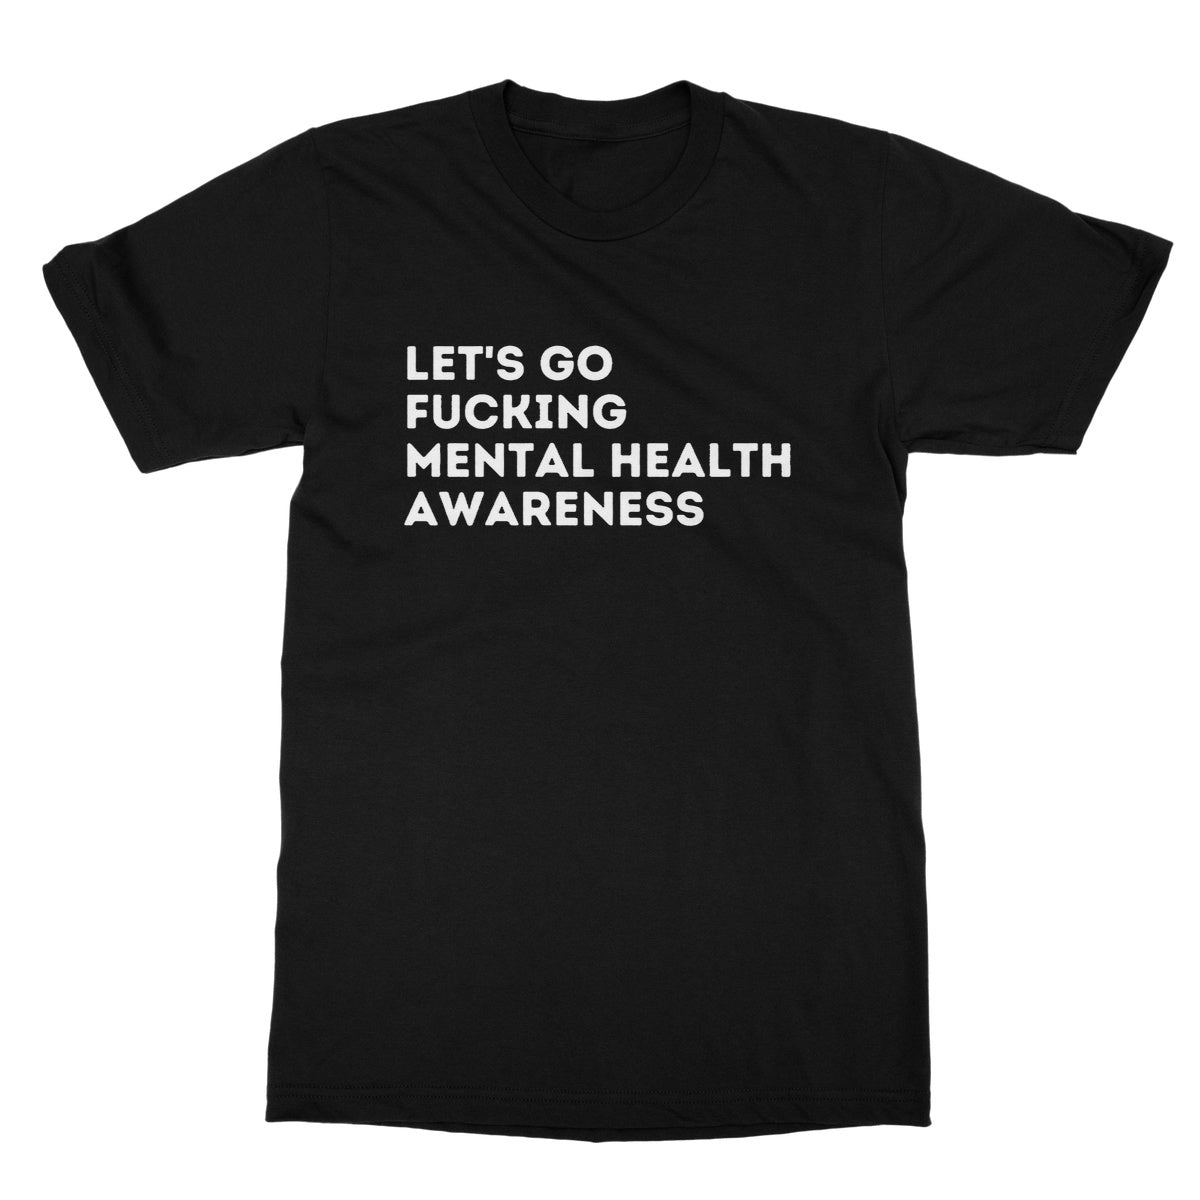 let's go fucking mental health awareness t shirt black